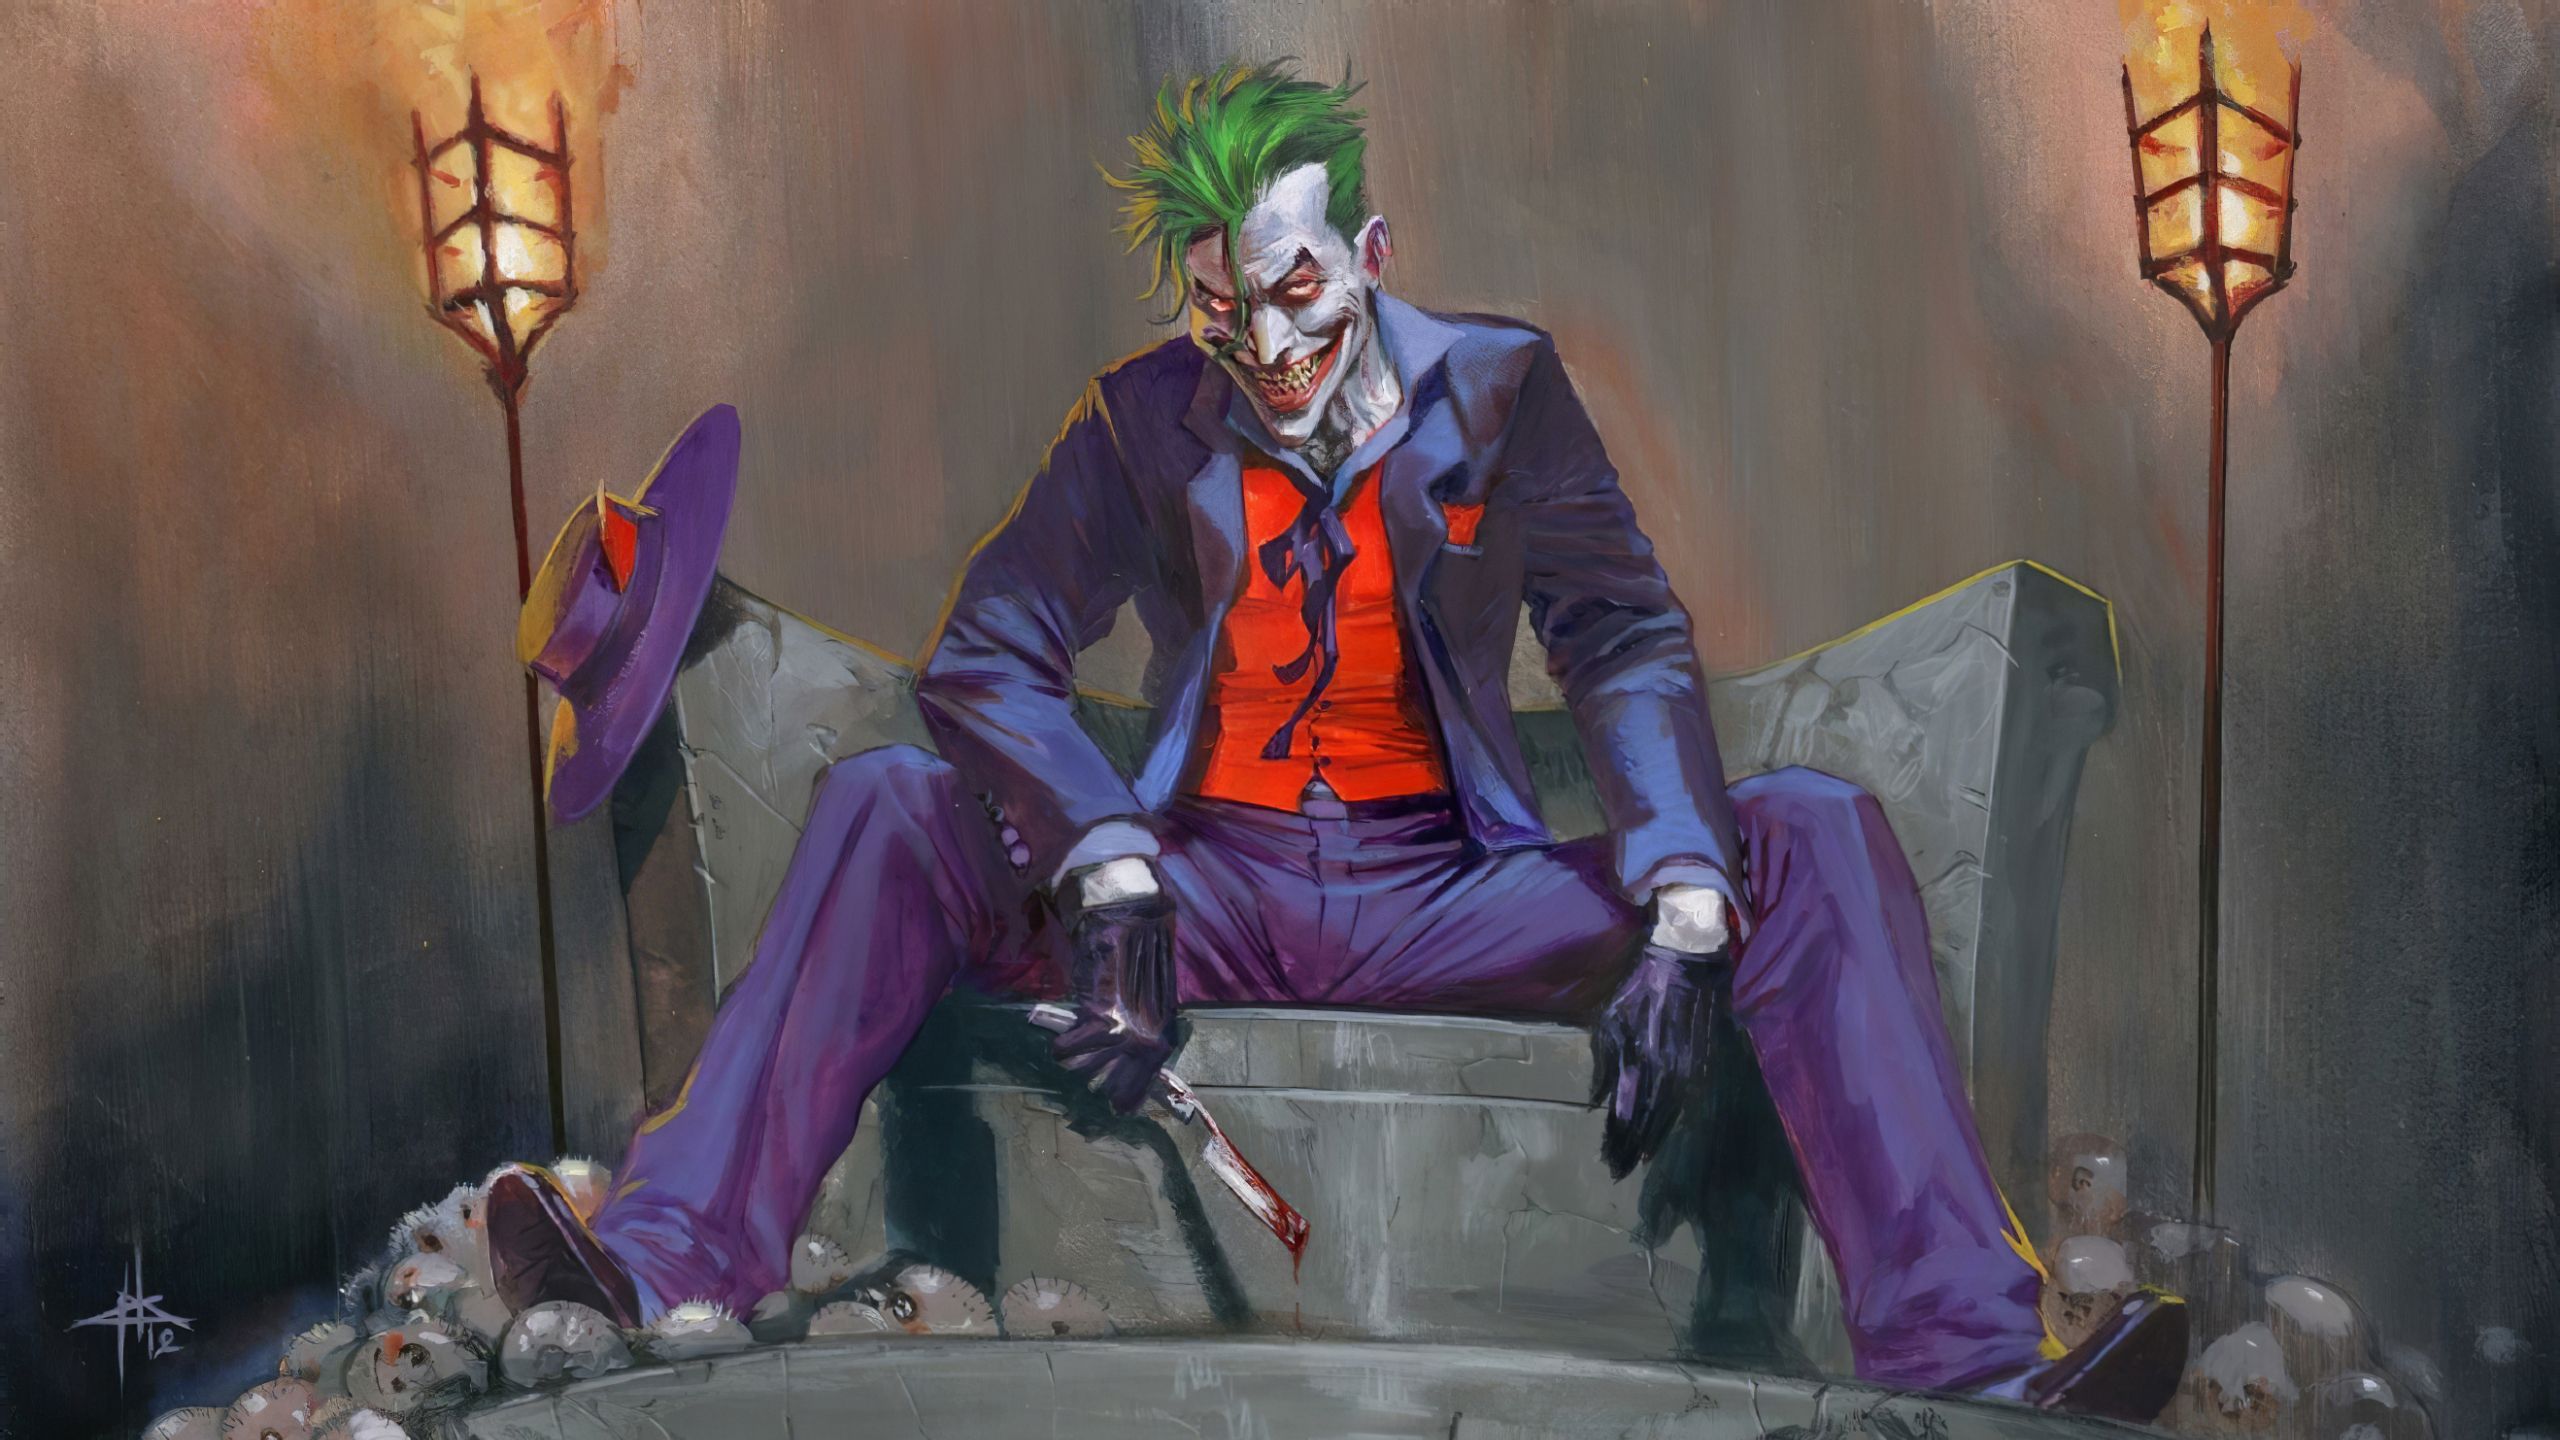 DC Comic Joker Art 1440P Resolution Wallpaper, HD Artist 4K Wallpaper, Image, Photo and Background